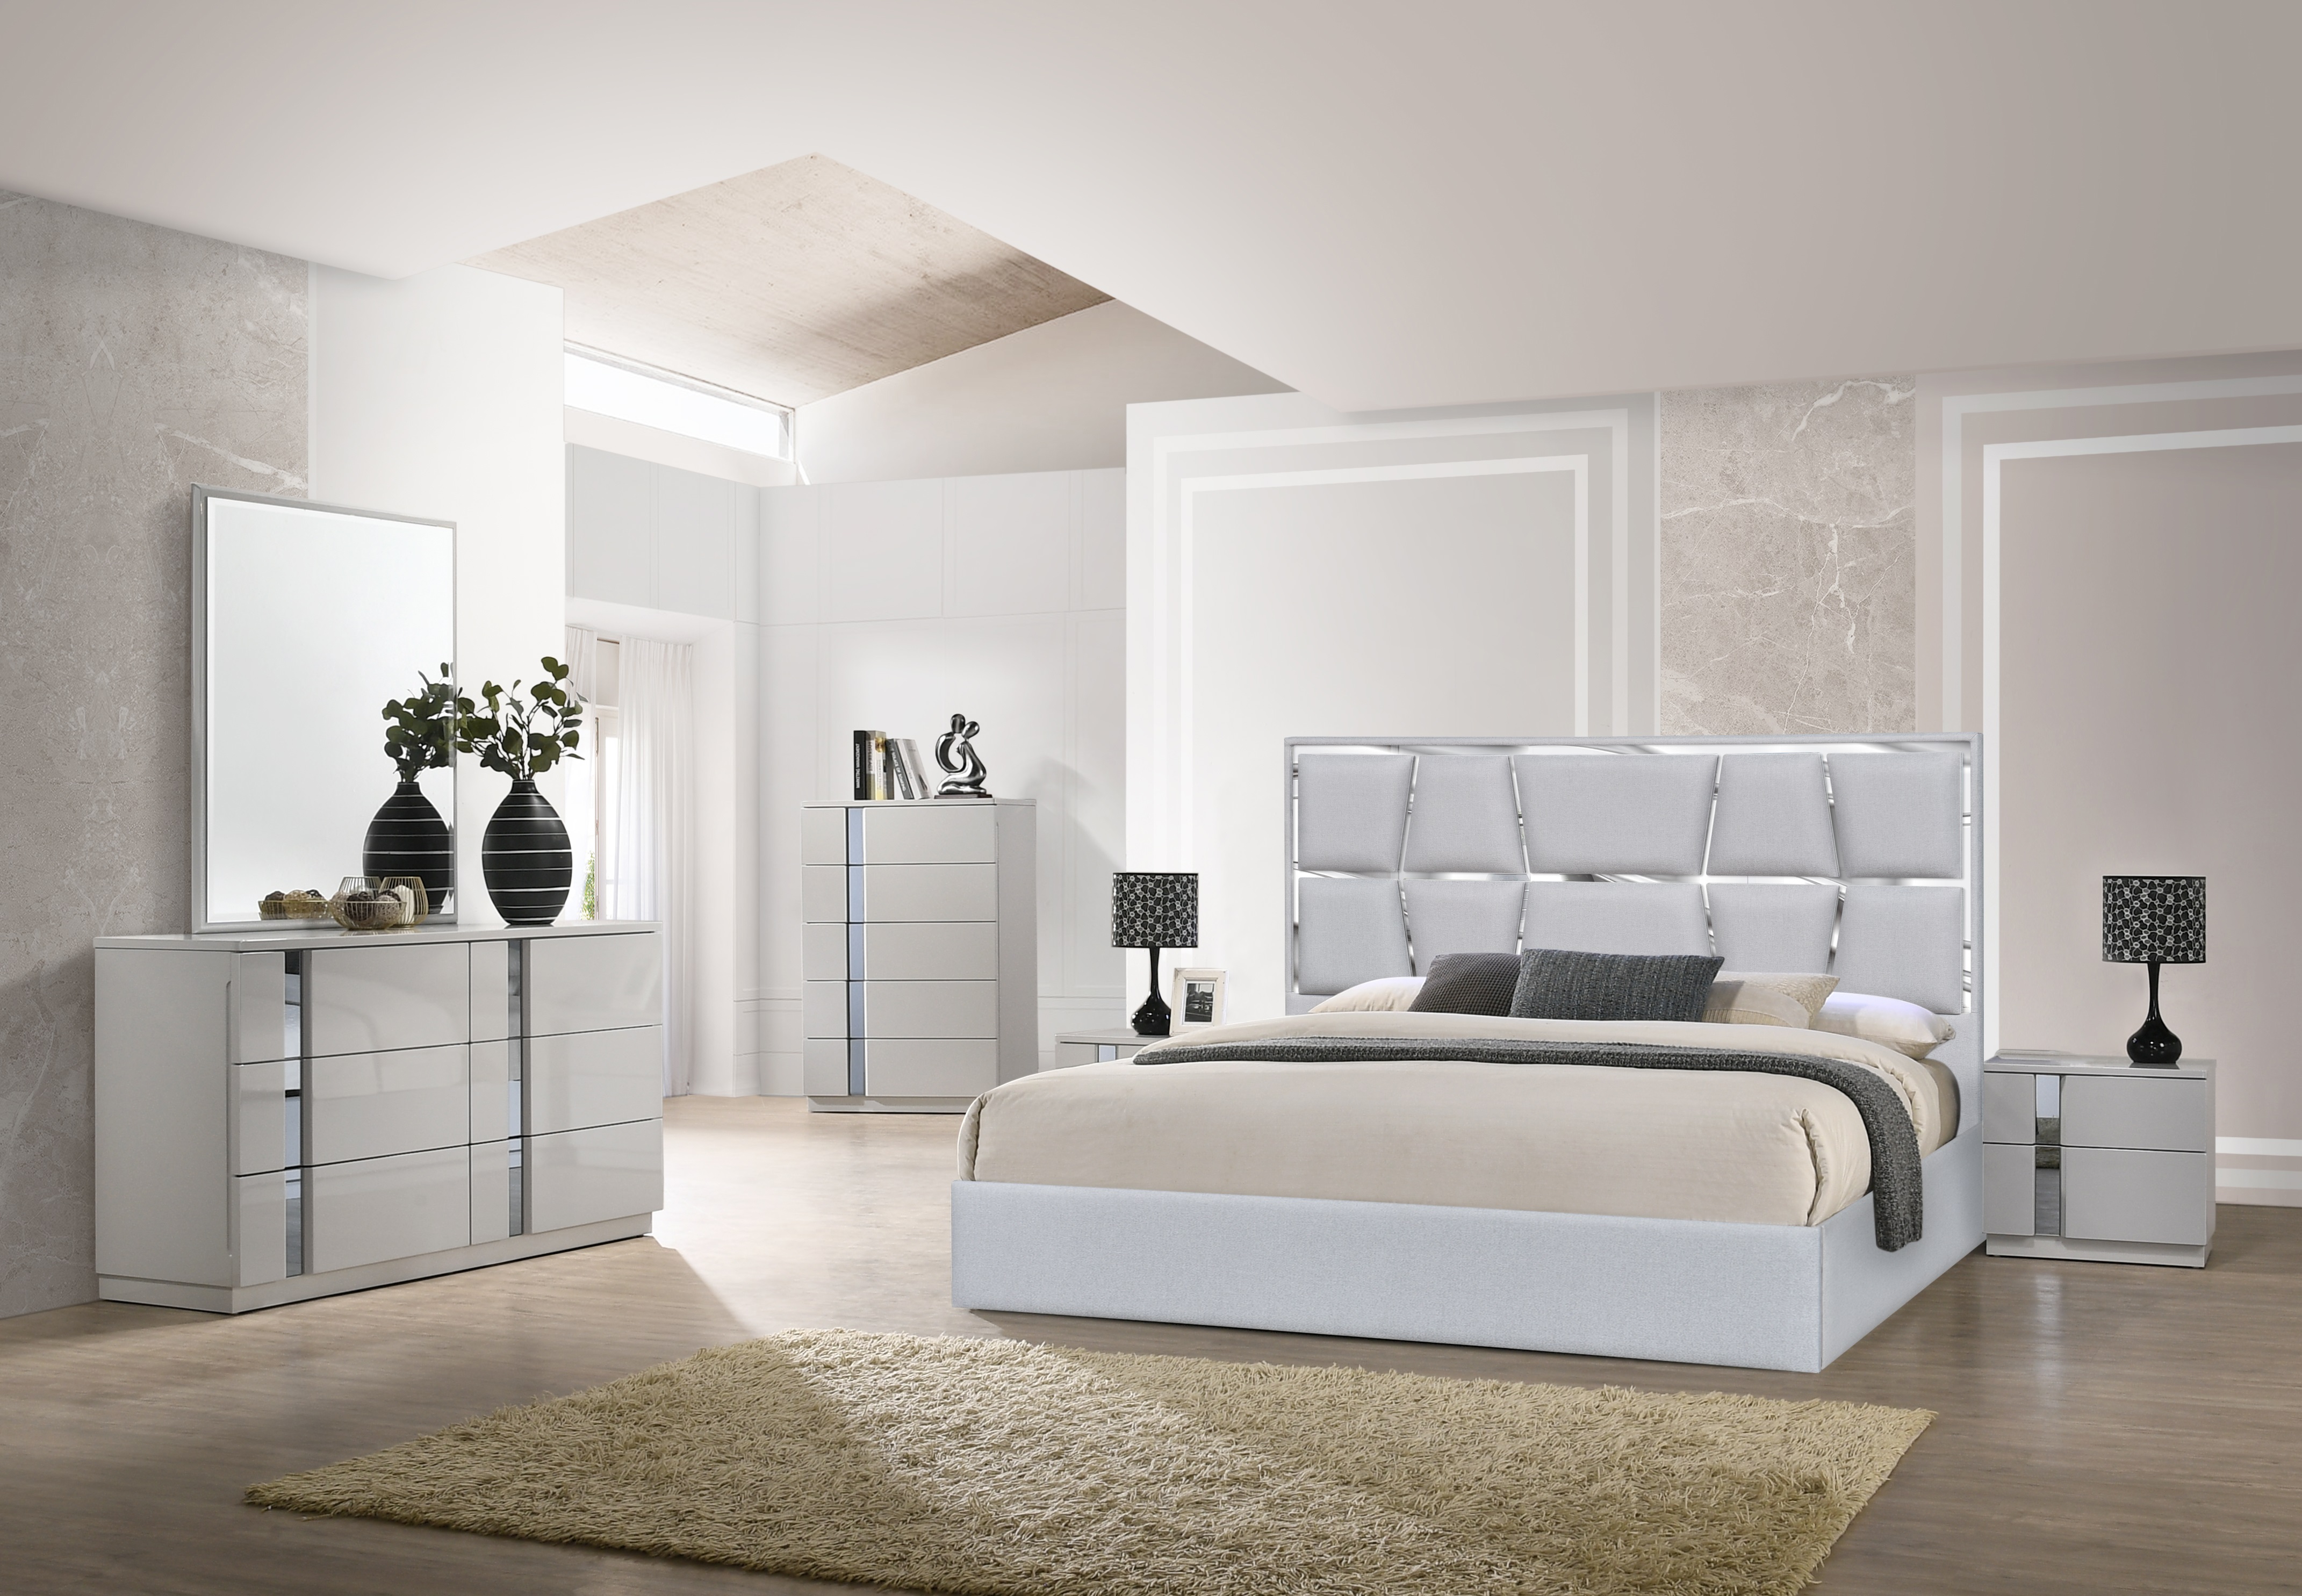 exquisite quality luxury bedroom furniture sets akron ohio j&m